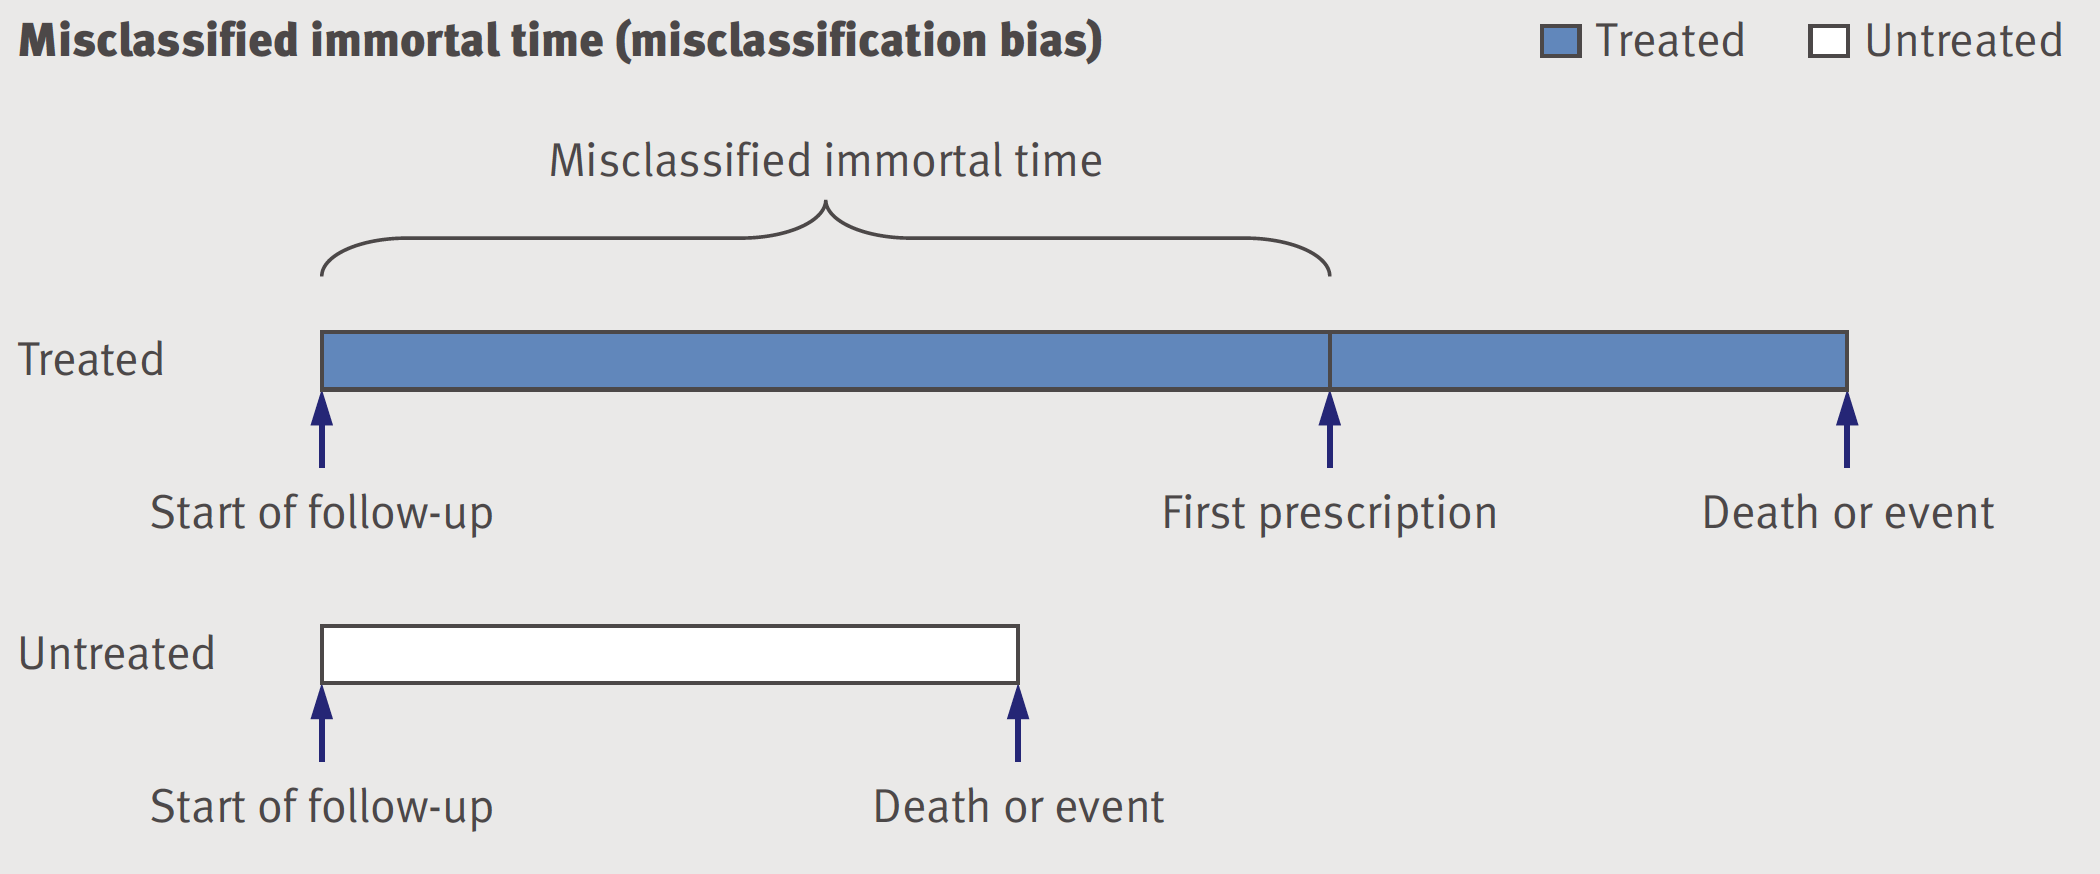 Misclassified immortal time - misclassification bias